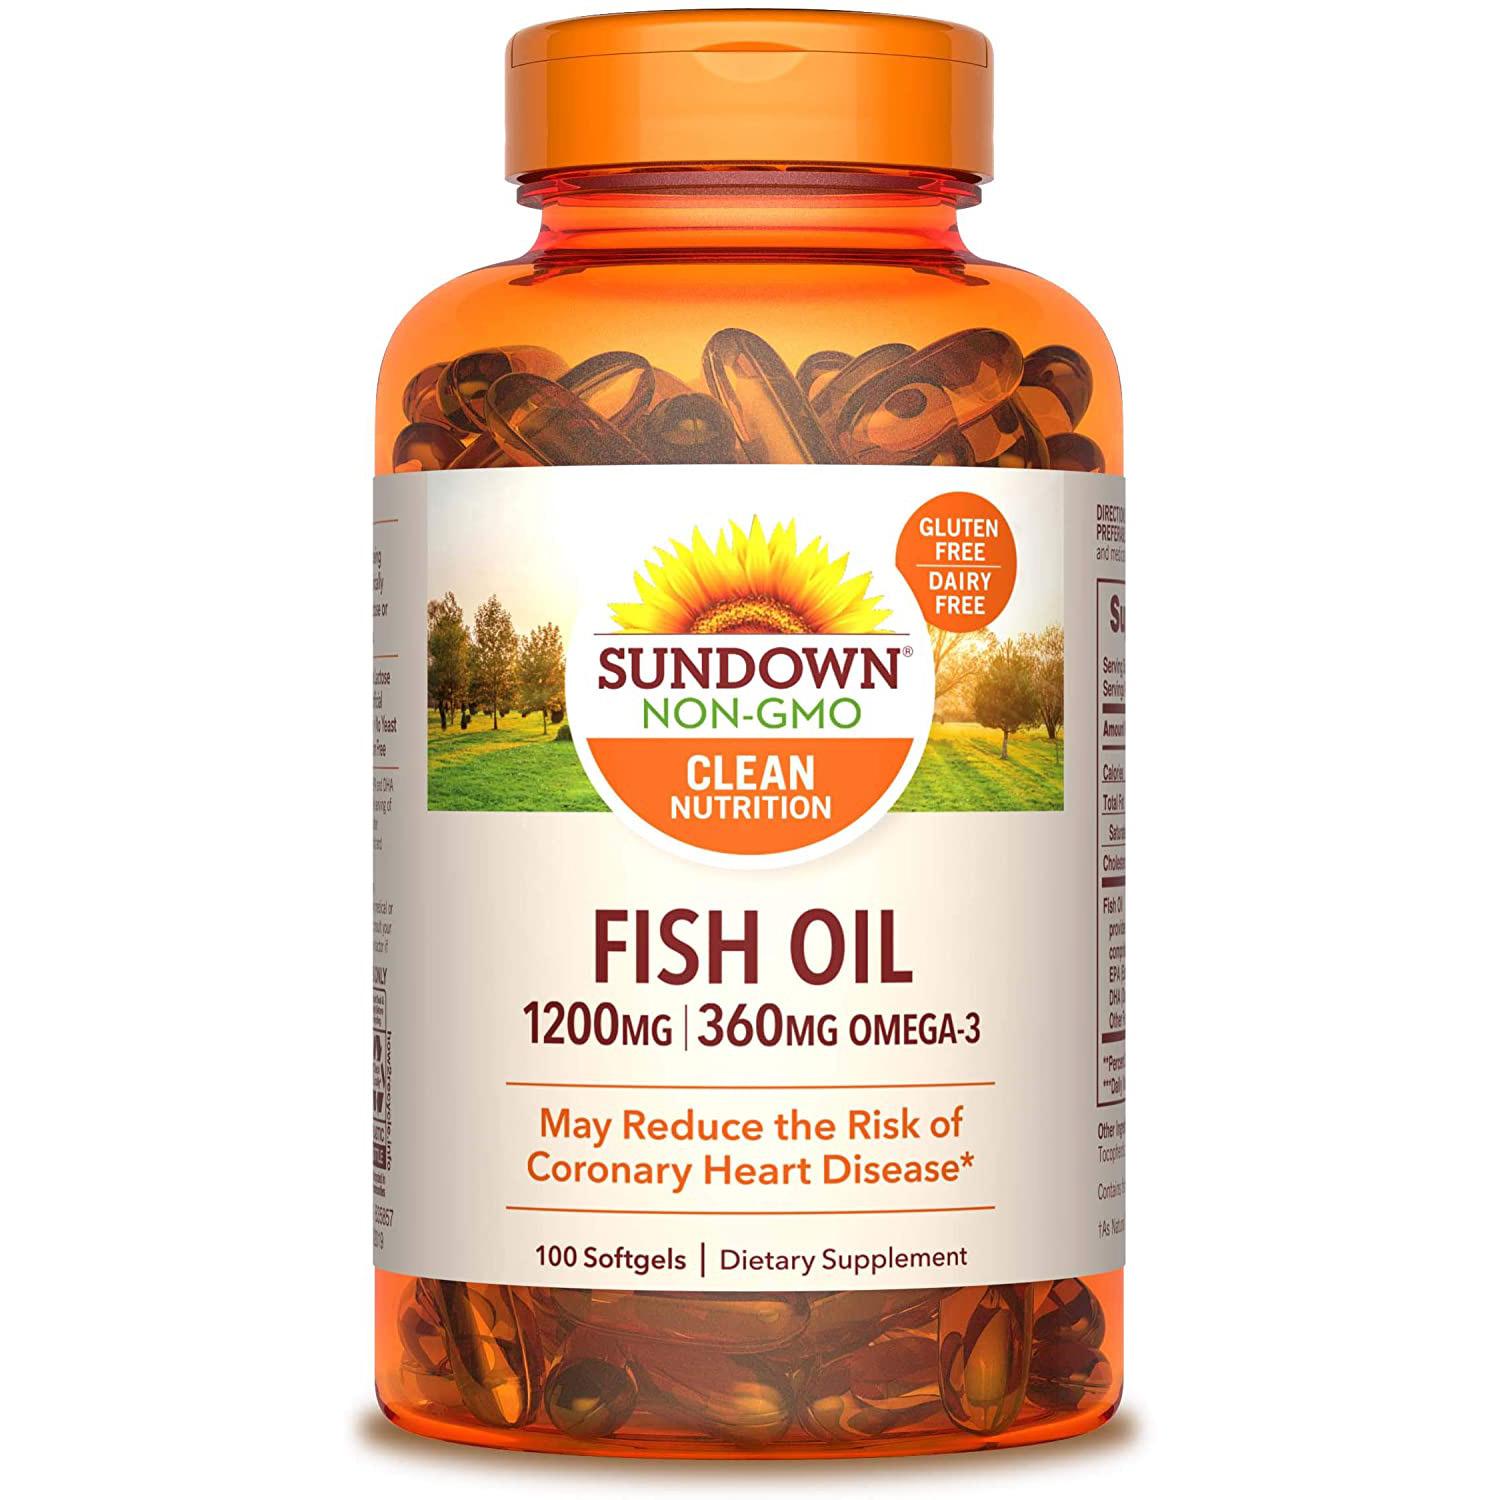 200 Sundown Fish Oil 1200mg Softgels for $6.15 Shipped